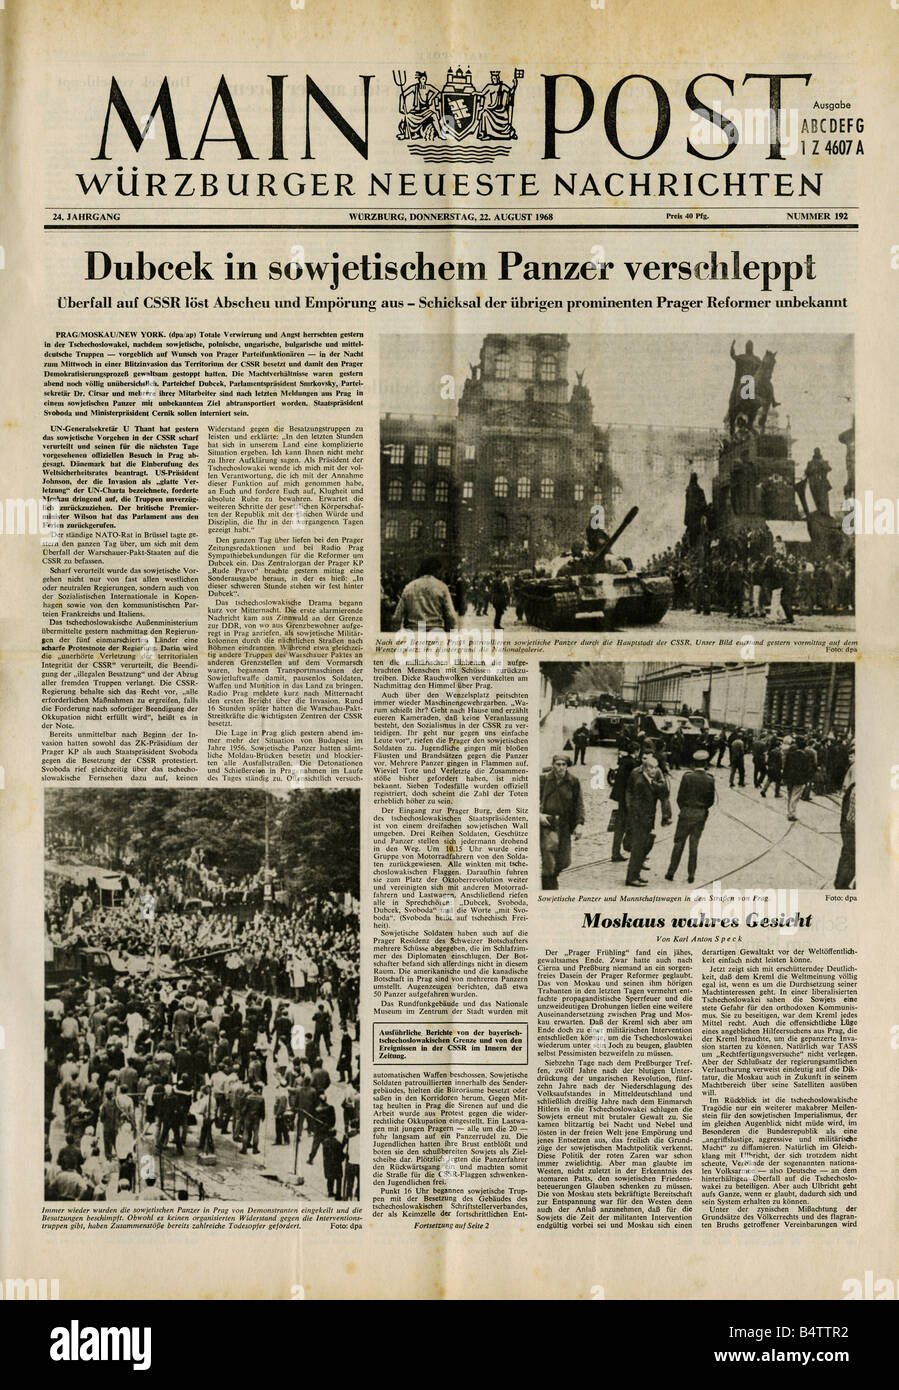 press/media, magazines, 'Main - Post', Würzburg, 24 volume, number 192, Thursday 22.8.1968, title, abduction of Dubcek in Soviet tank, , Stock Photo